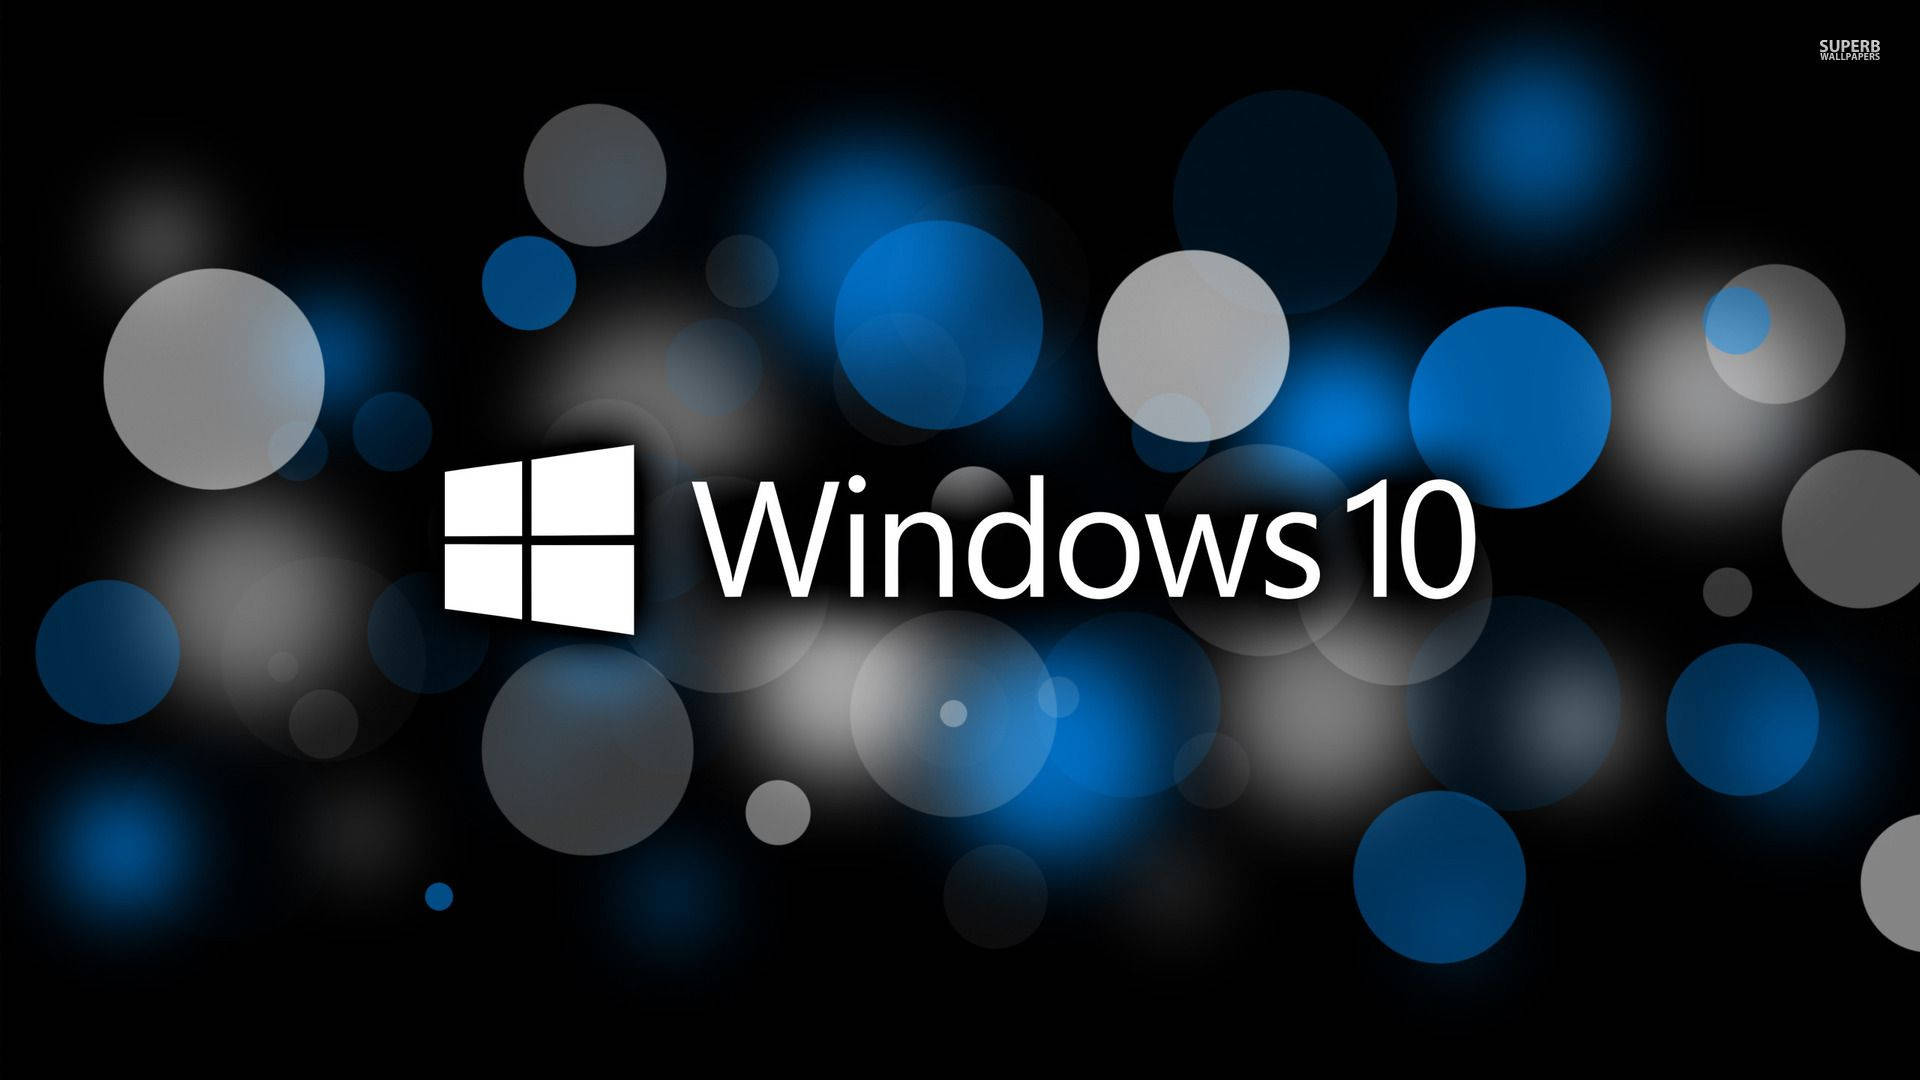 Windows 10 Hd Light Specks Background